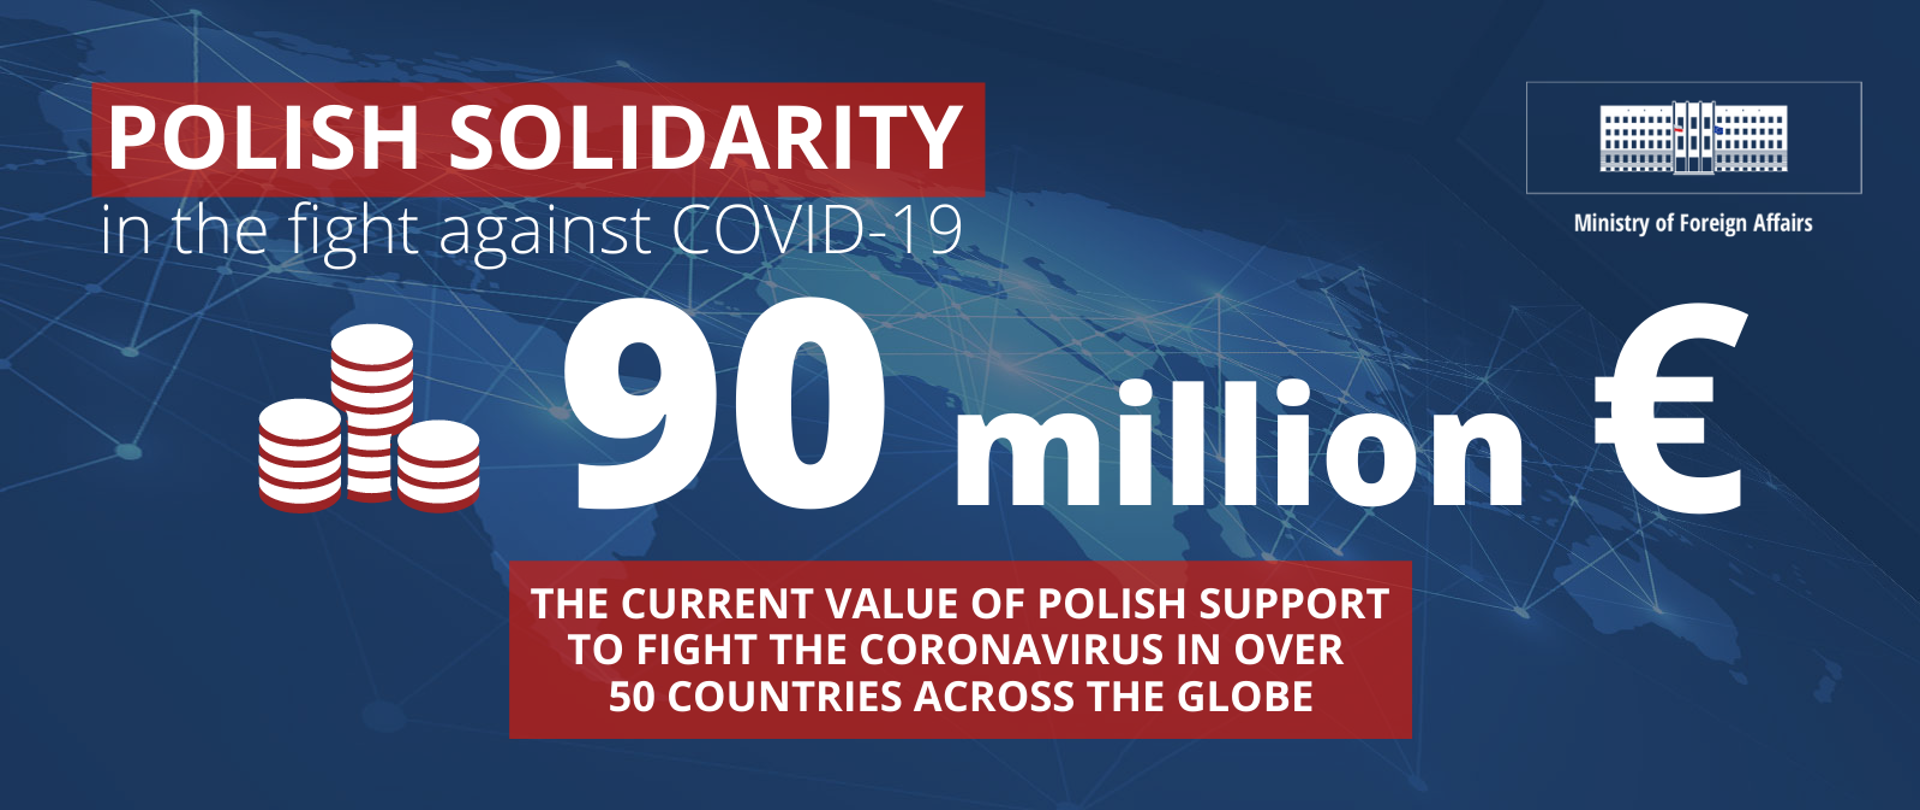 Polish solidarity